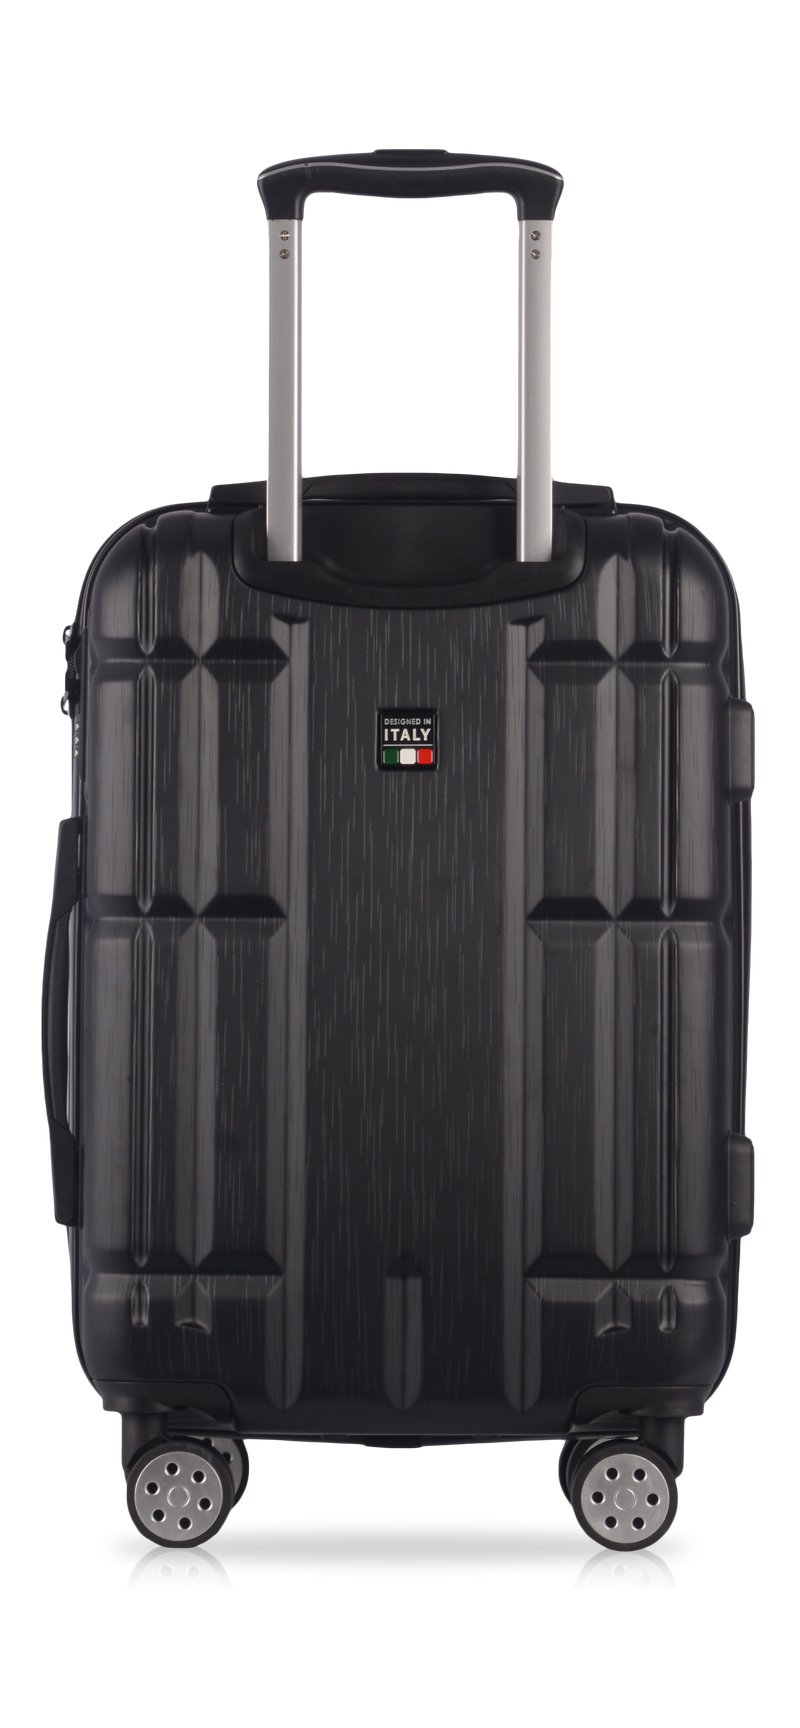 TUCCI Italy MASSA 30" Durable Lightweight Suitcase